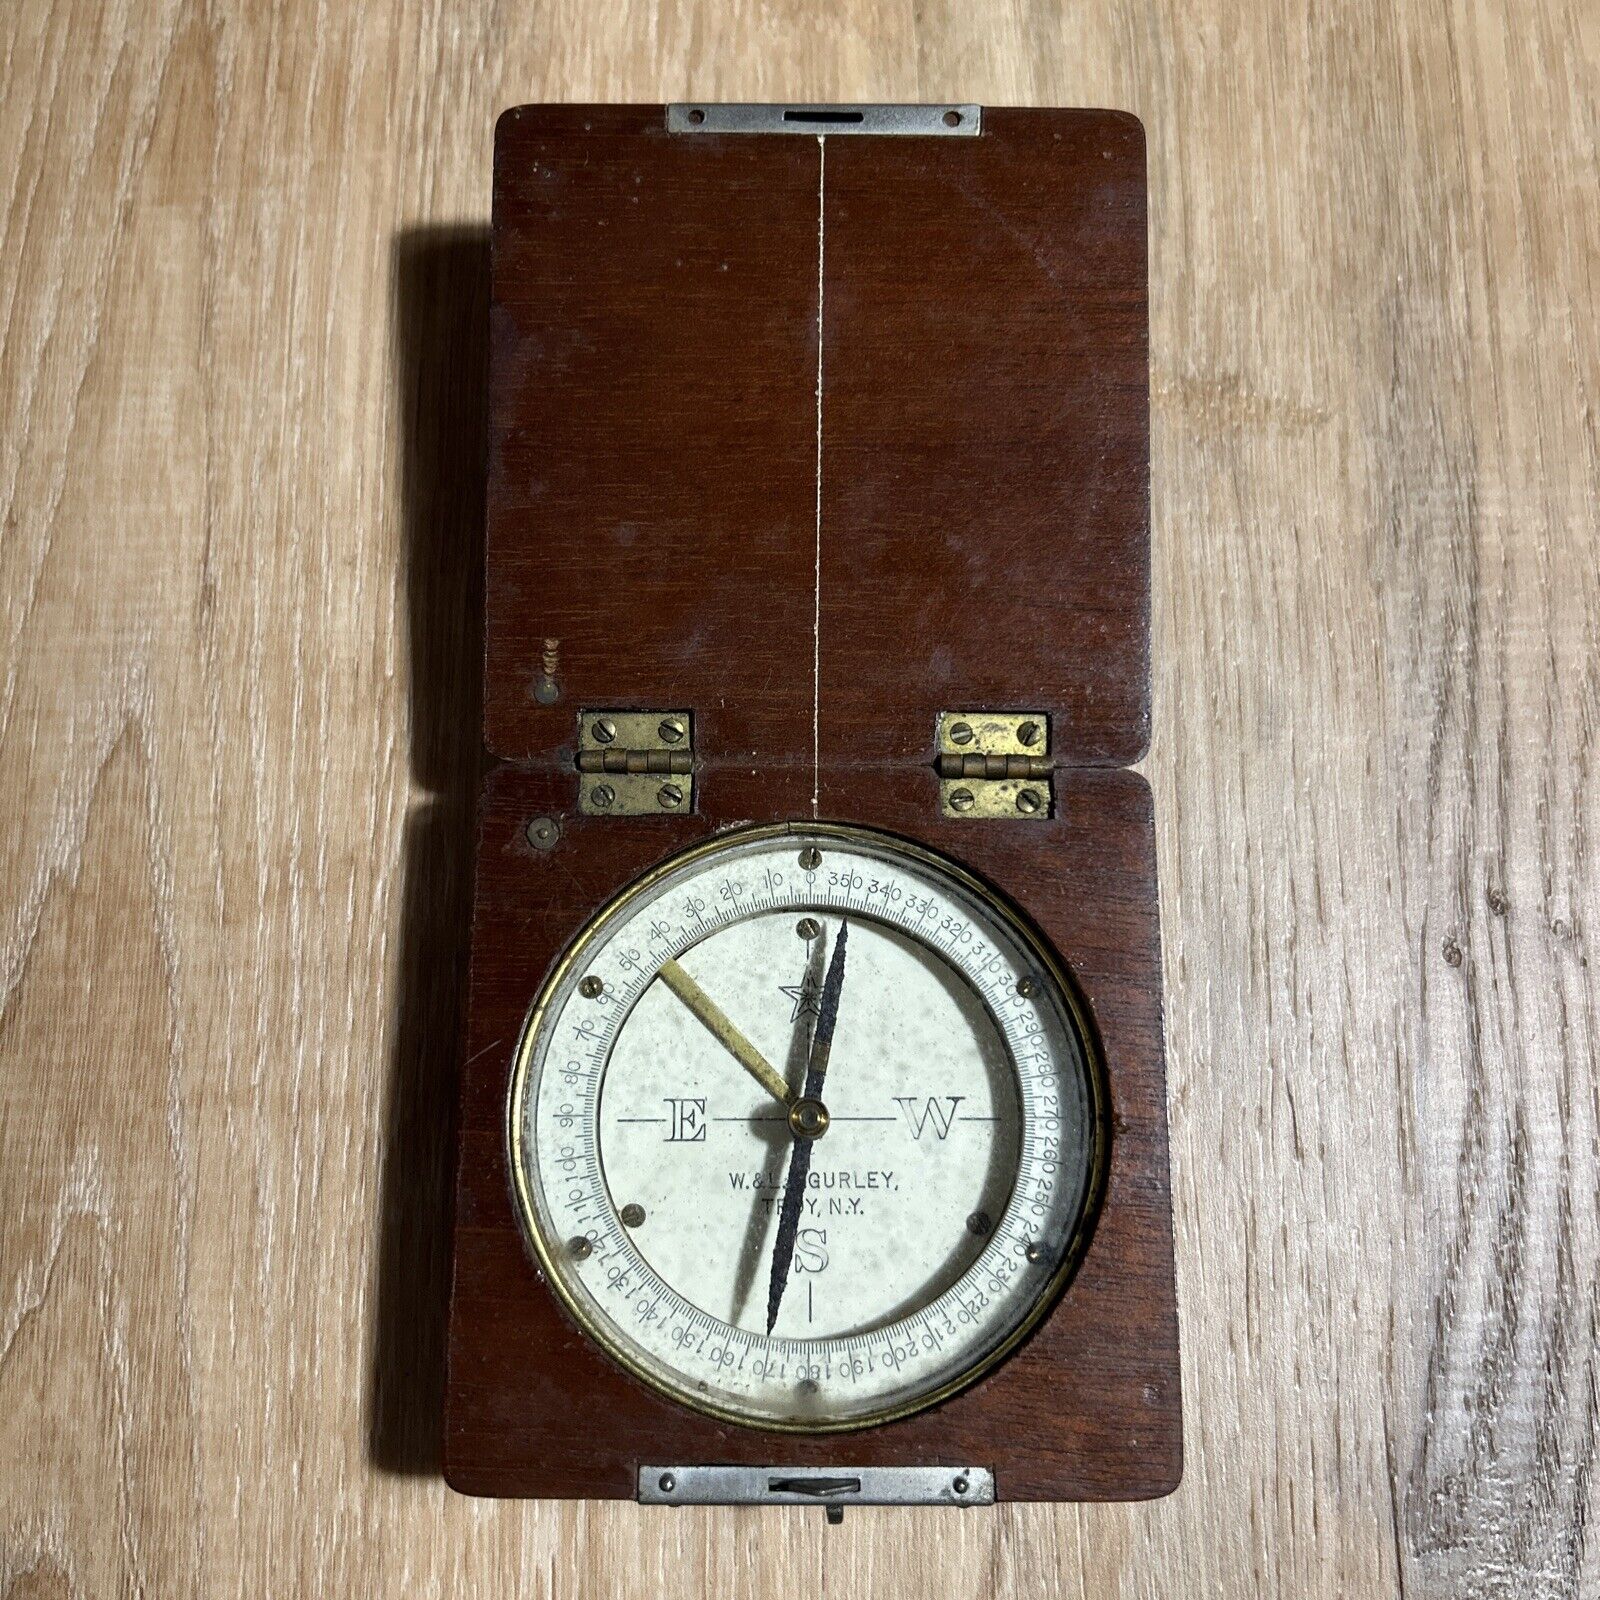 Vintage W & L.E. GURLEY Compass In Wood Case Box Engineer Surveyor TROY N.Y.